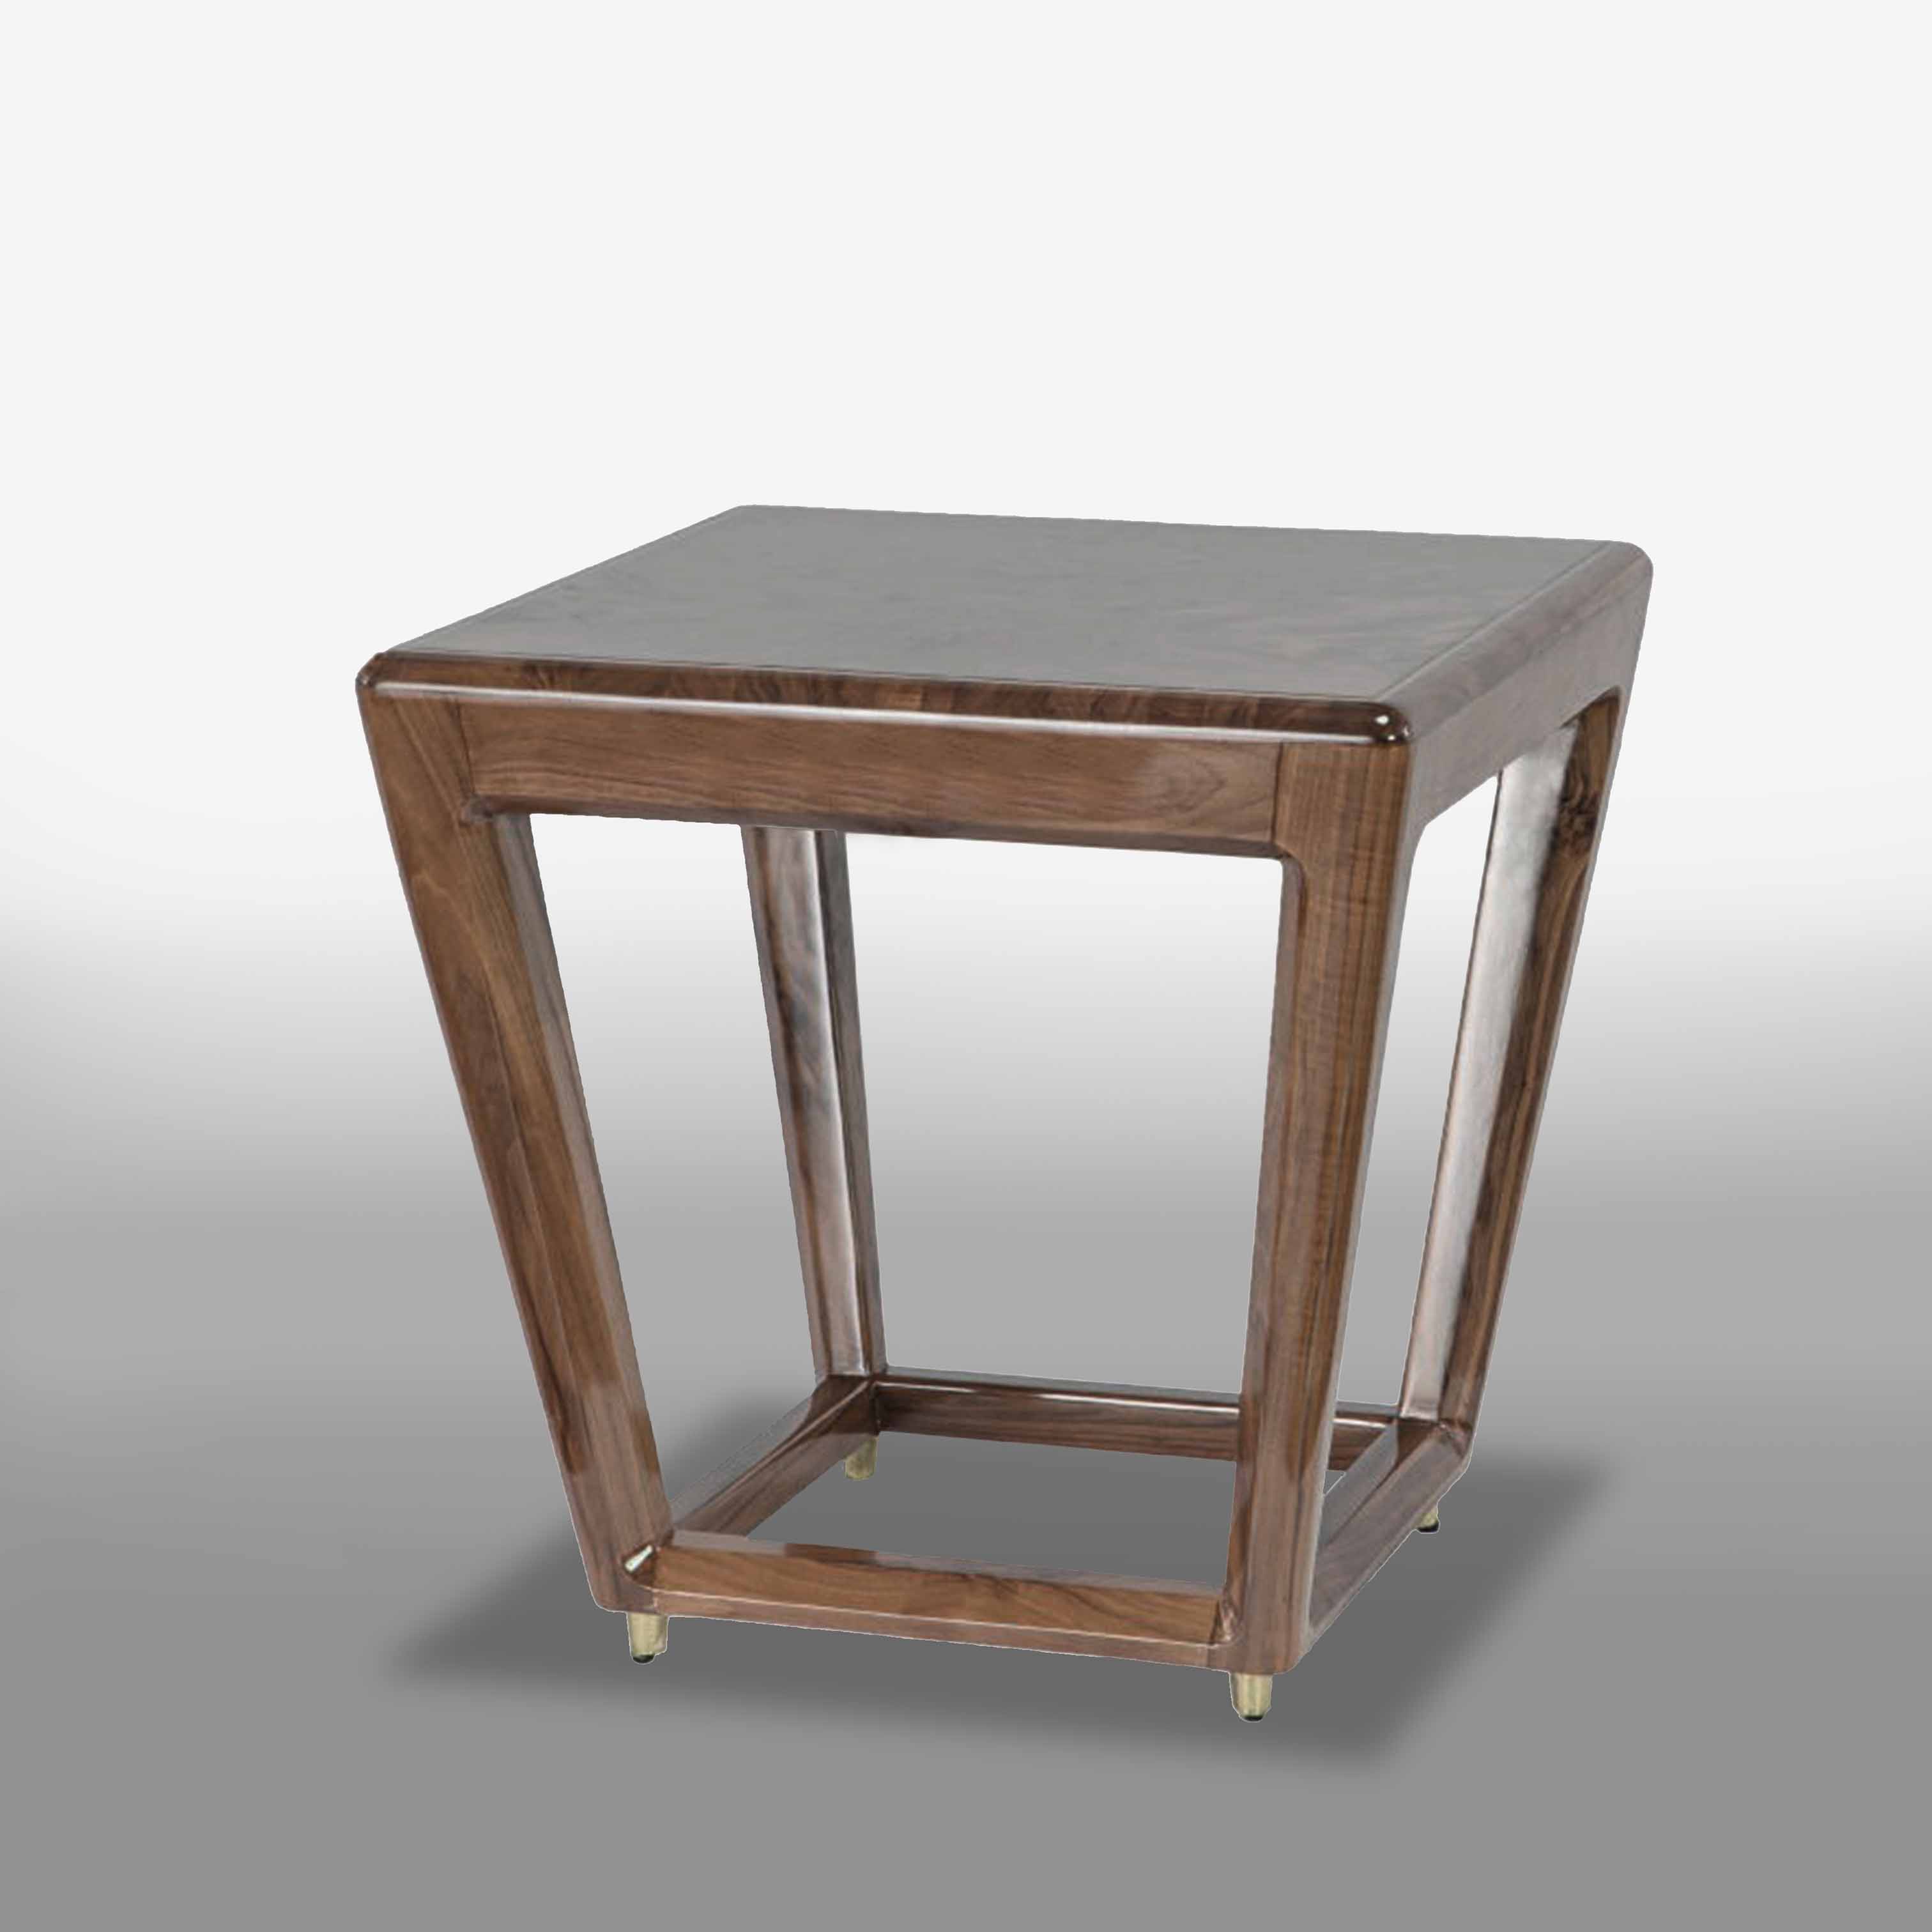 Elegant square wooden table - B58LHFU